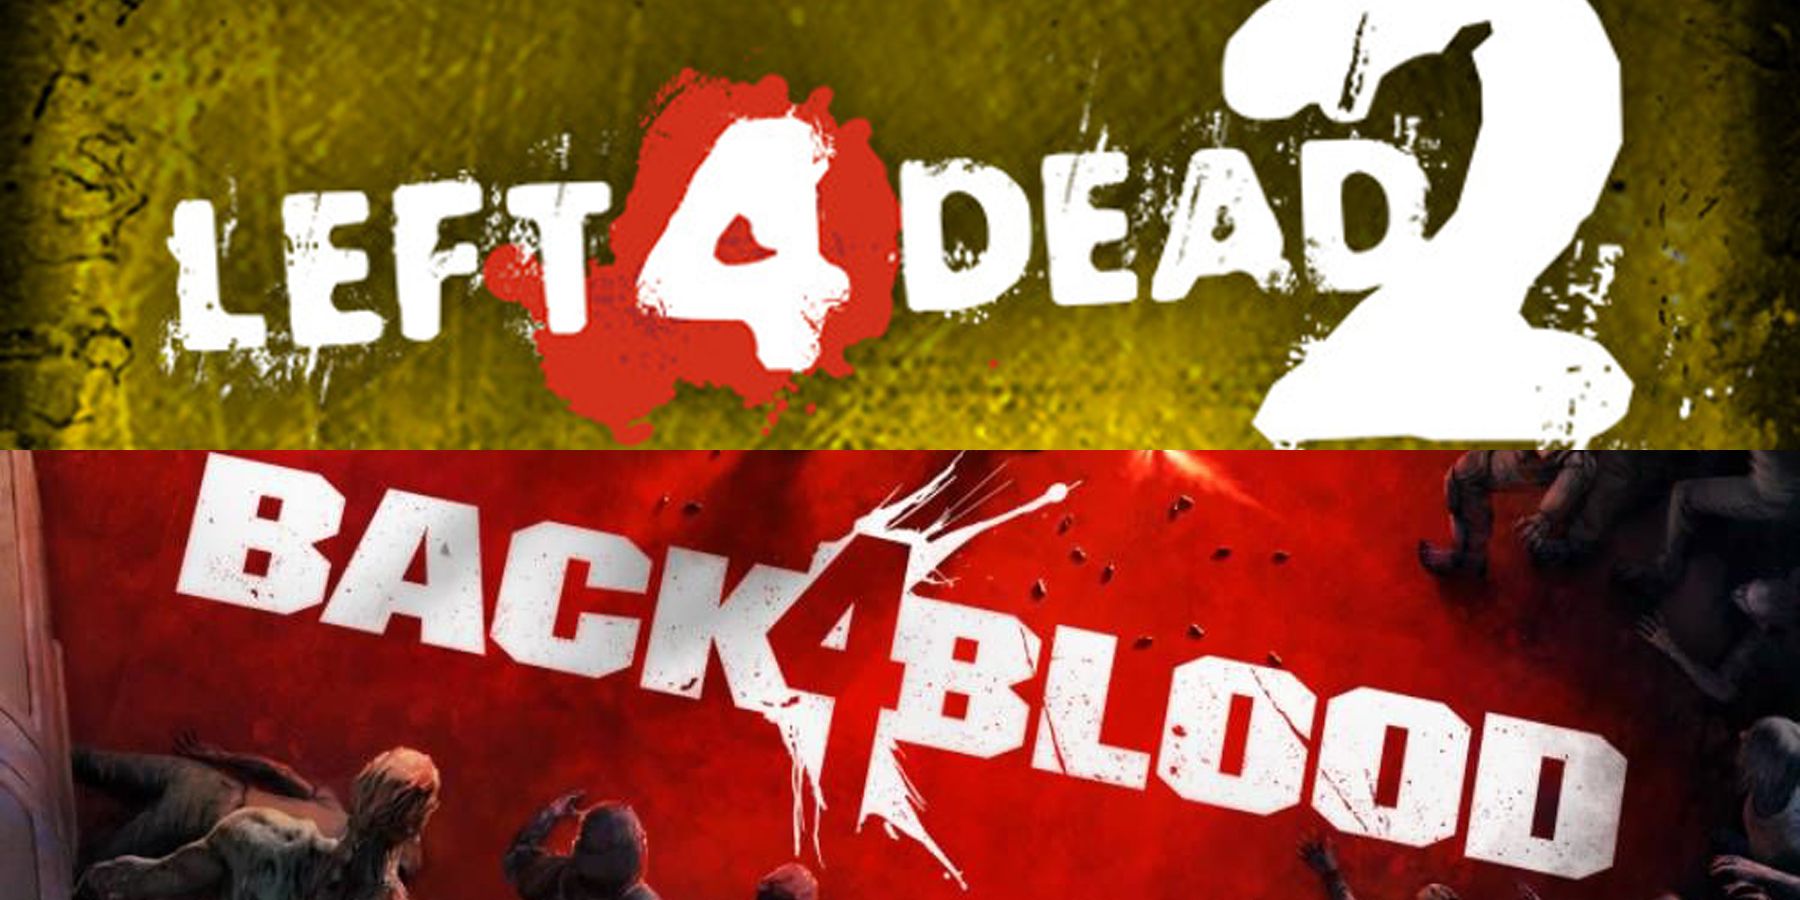 Left 4 Dead and Back 4 Blood titles